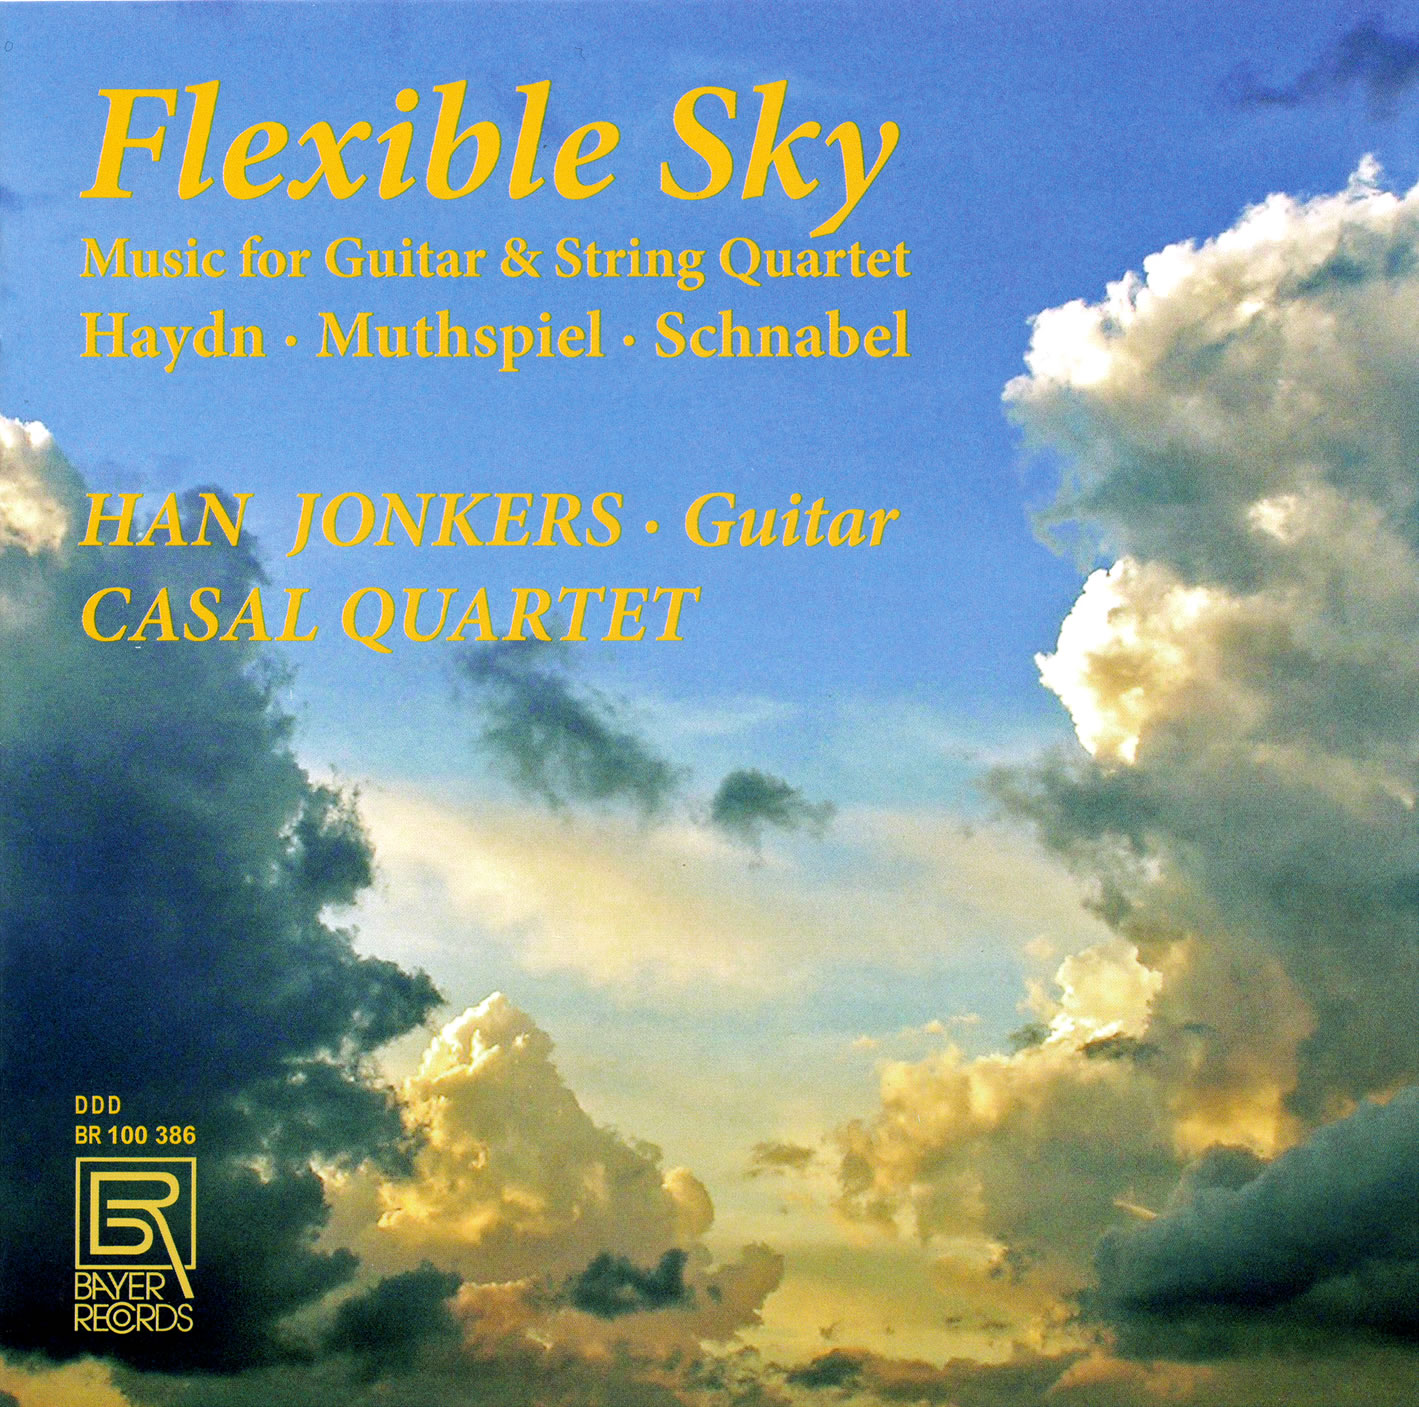 Flexible Sky - Music for Guitar & String Quartet